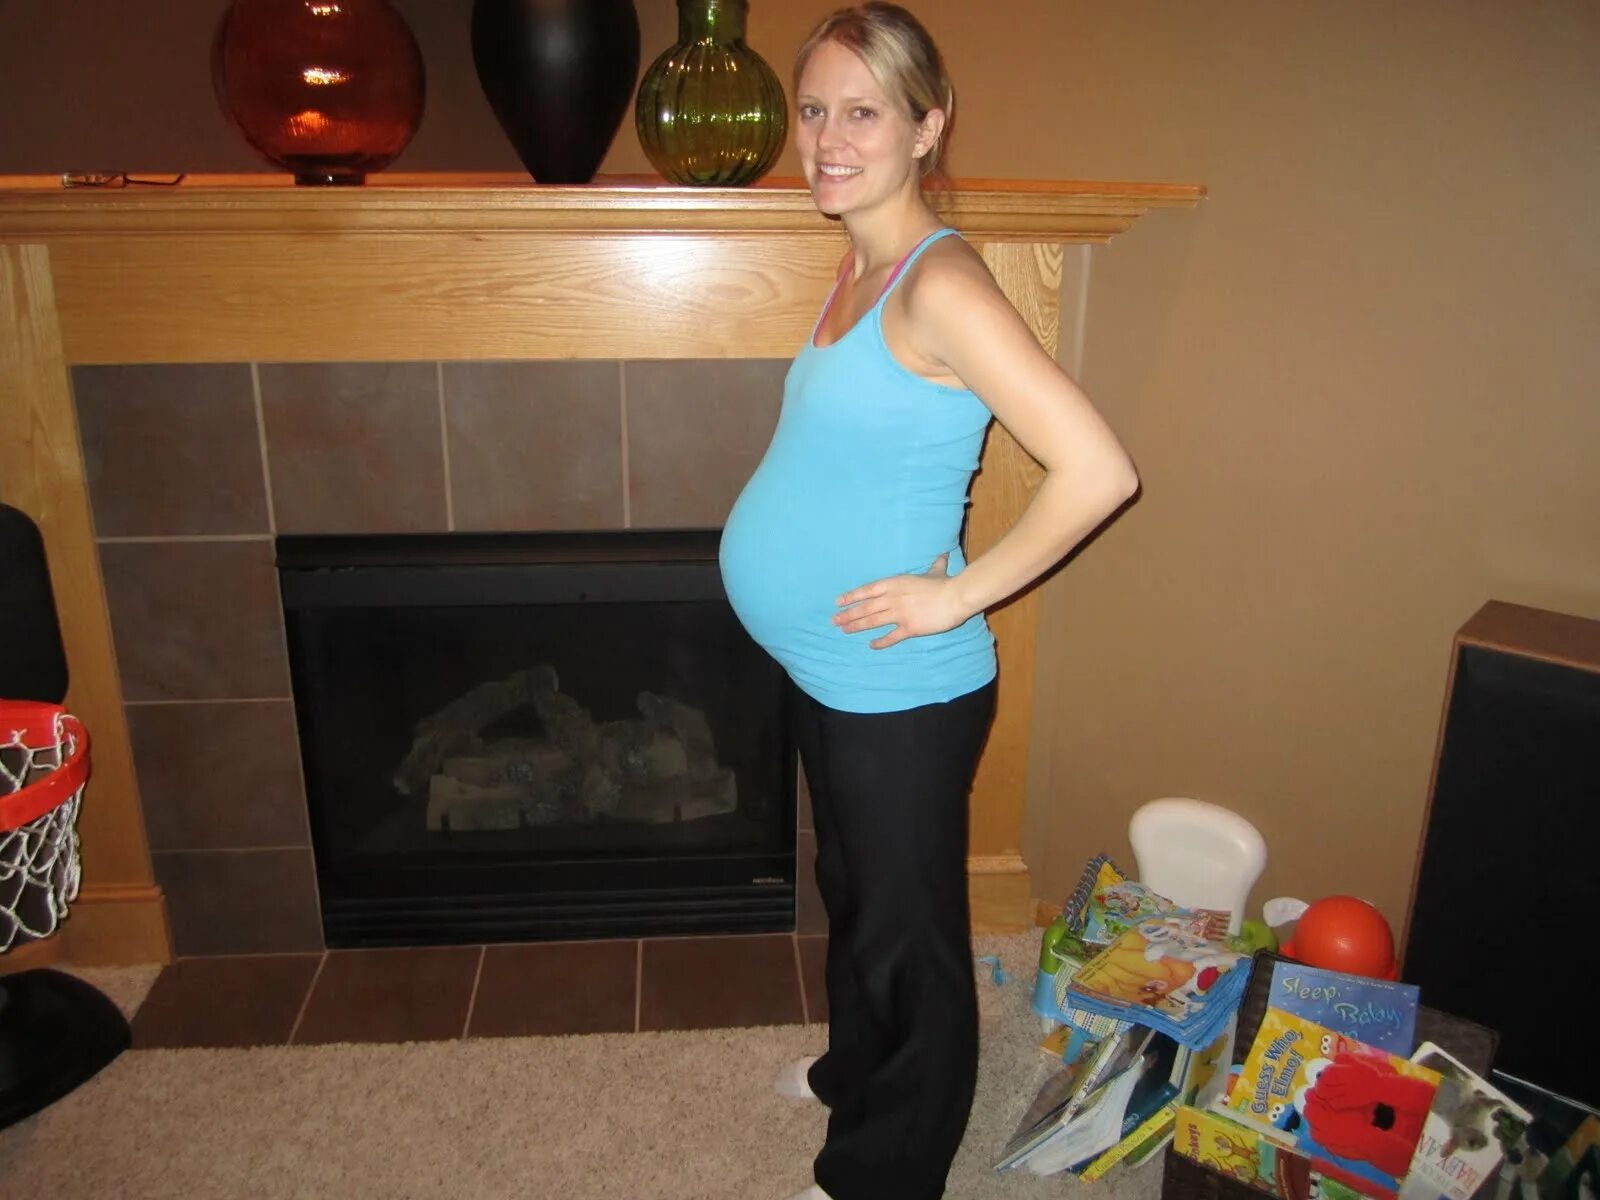 Preggo Deline 8 months. 7th month of pregnancy.